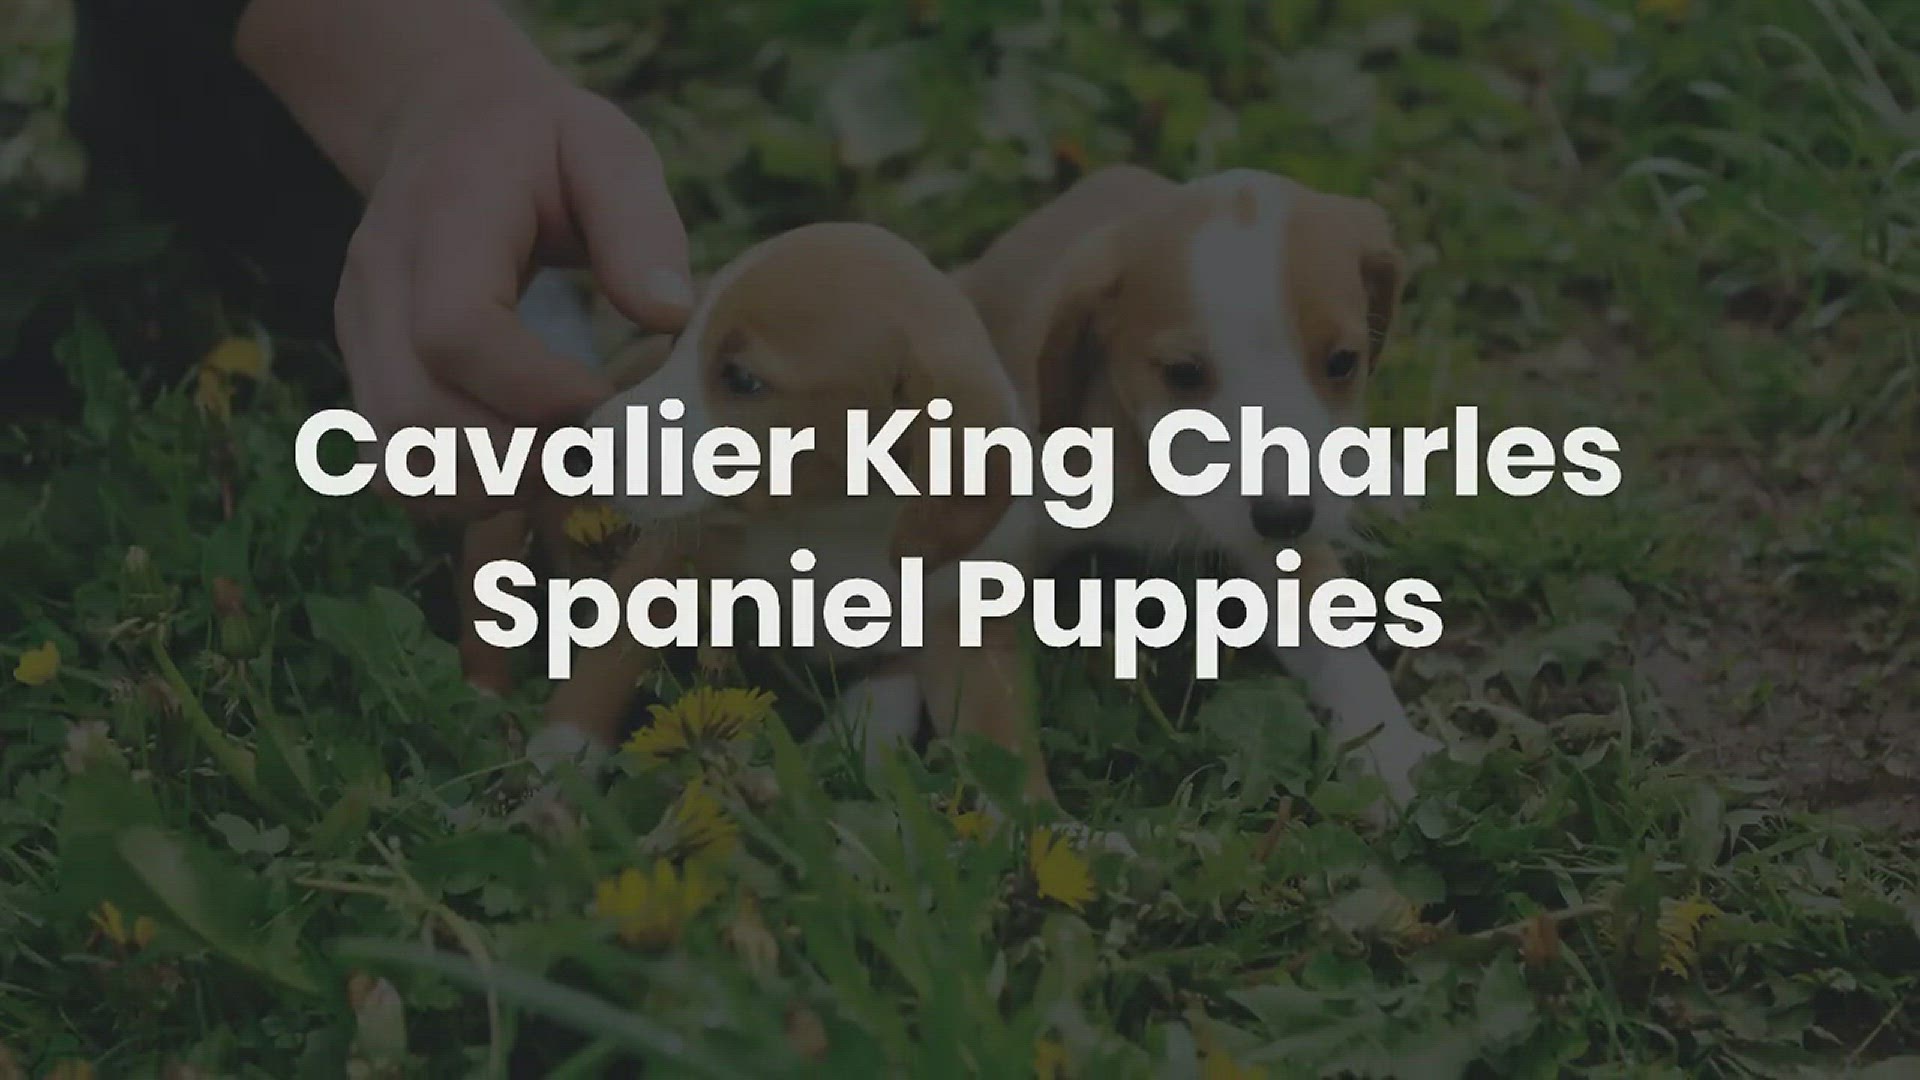 'Video thumbnail for Cavalier King Charles Spaniel'